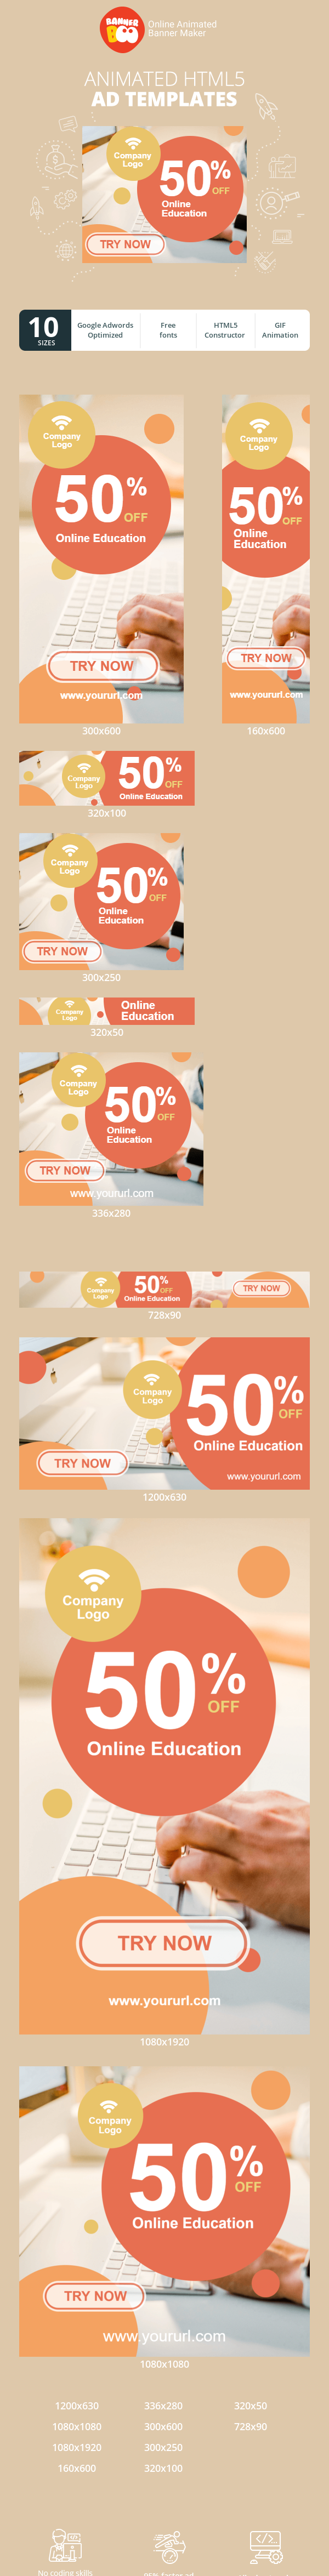 Szablon reklamy banerowej — Online Education — 50% off